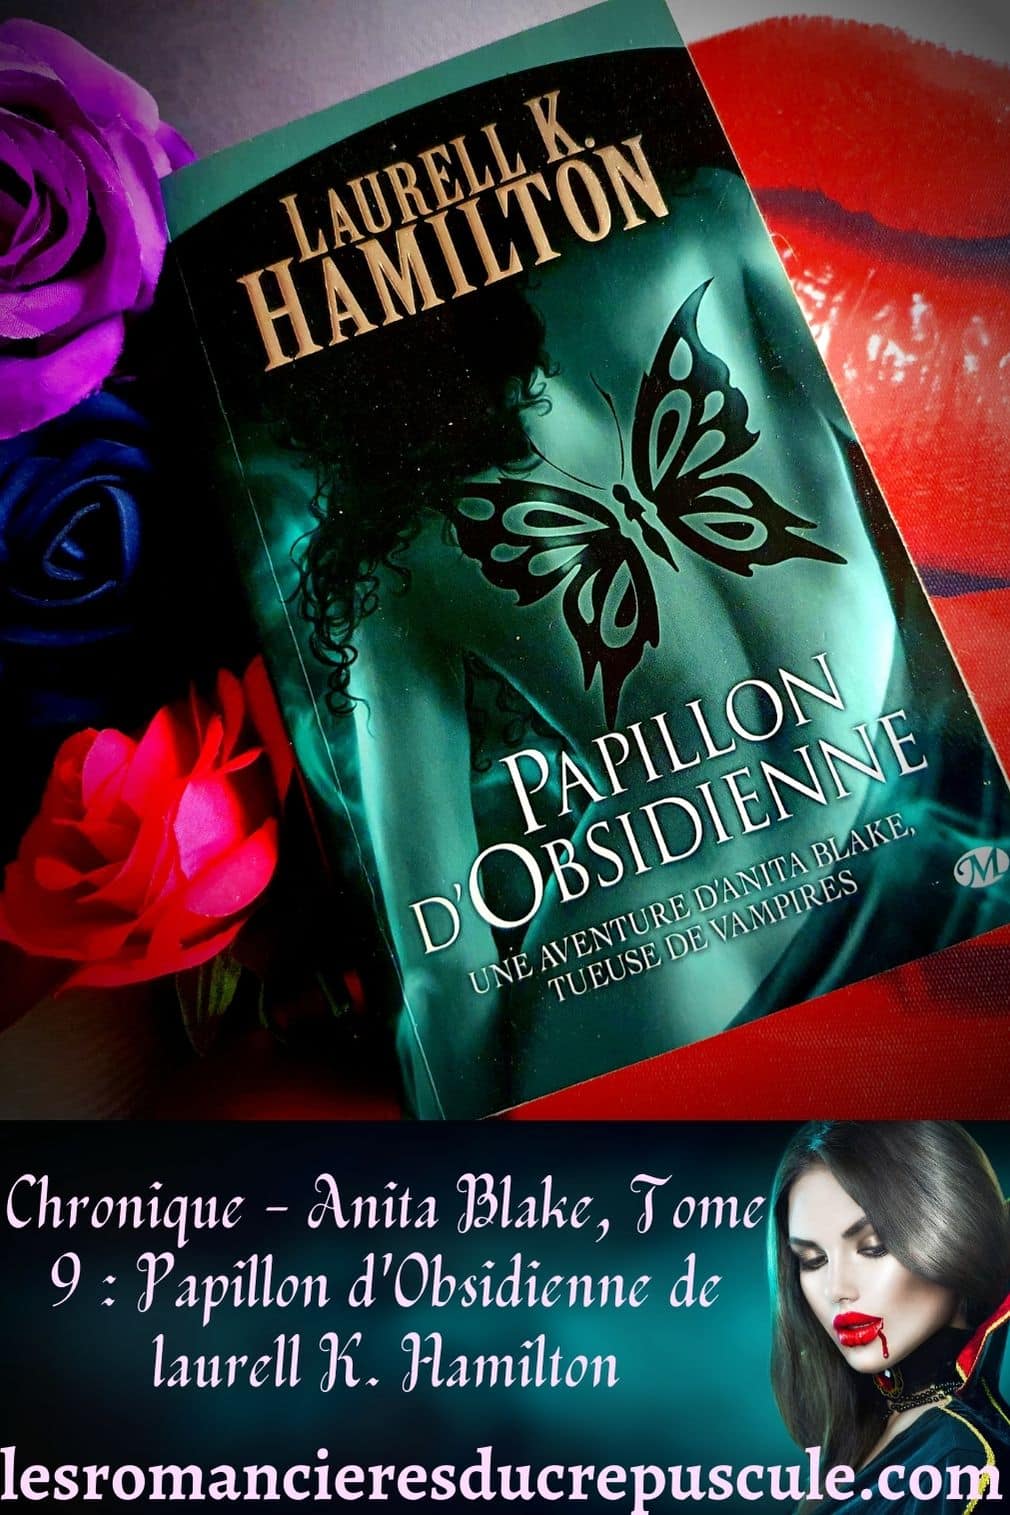 Anita Blake, Tome 9 Papillon d'Obsidienne de laurell K. Hamilton - pinterest